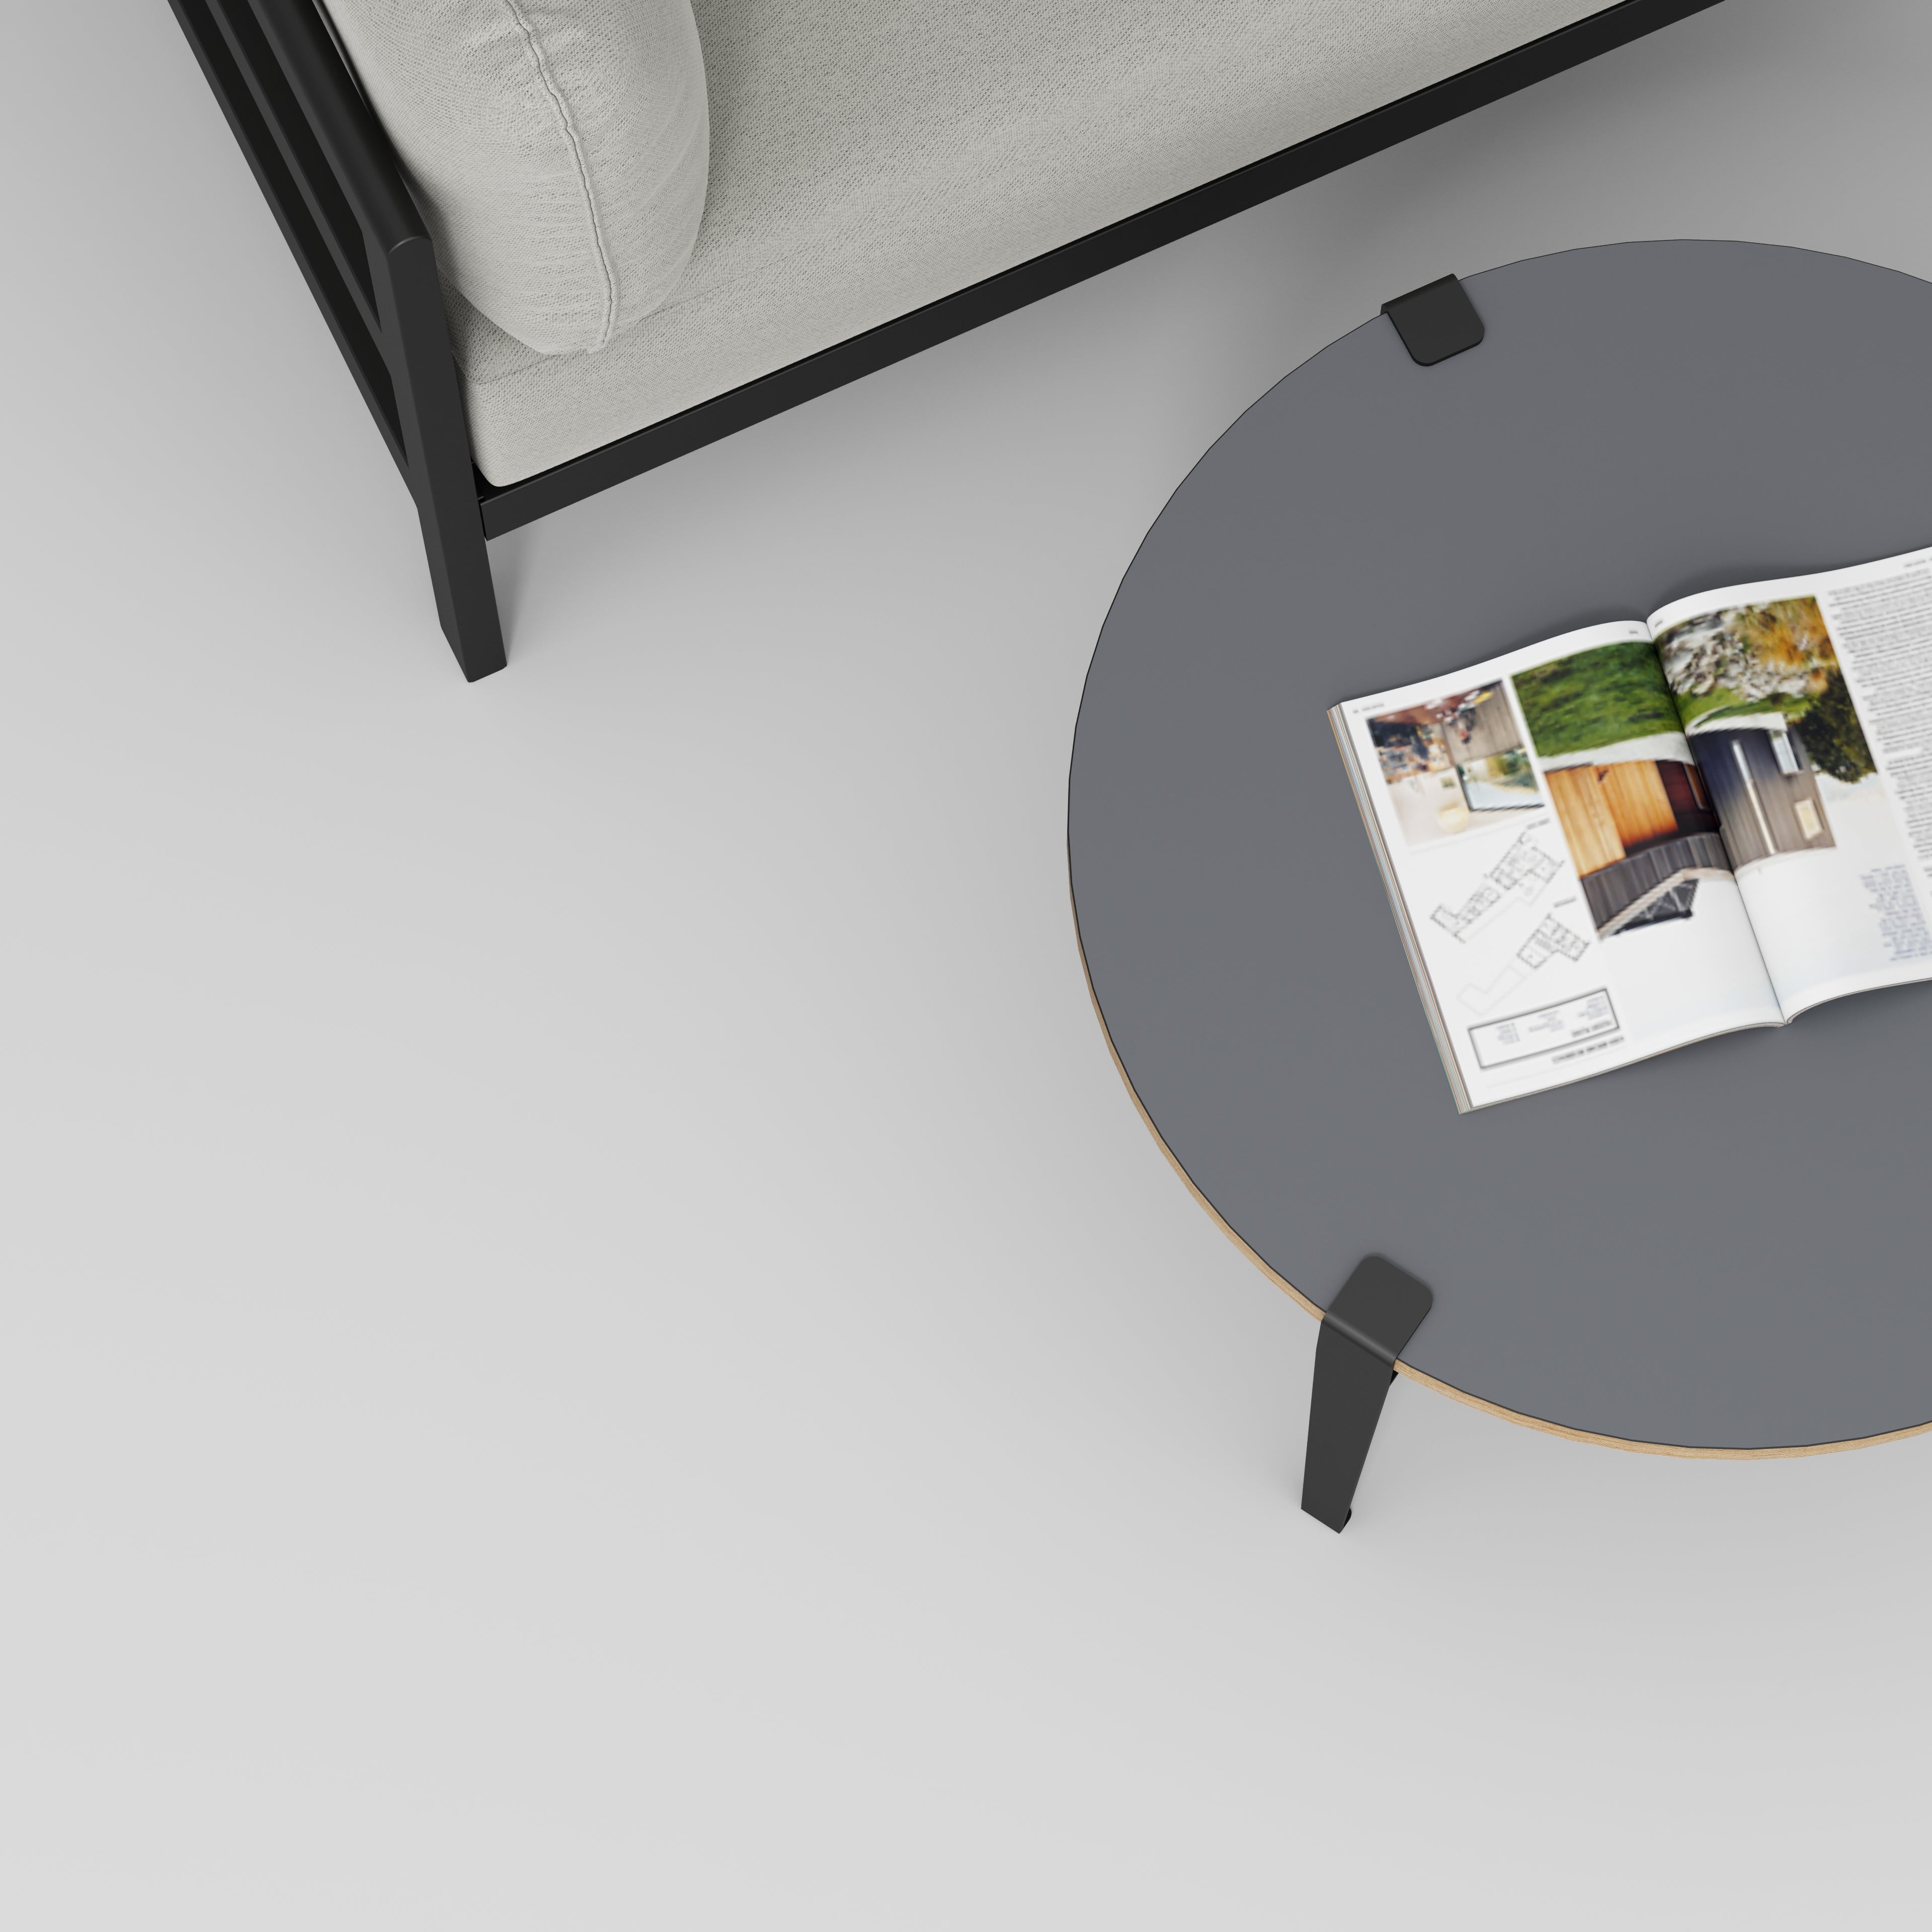 Round Coffee Table with Black Tiptoe Legs - Formica Tornado Grey - 800(dia) x 430(h)